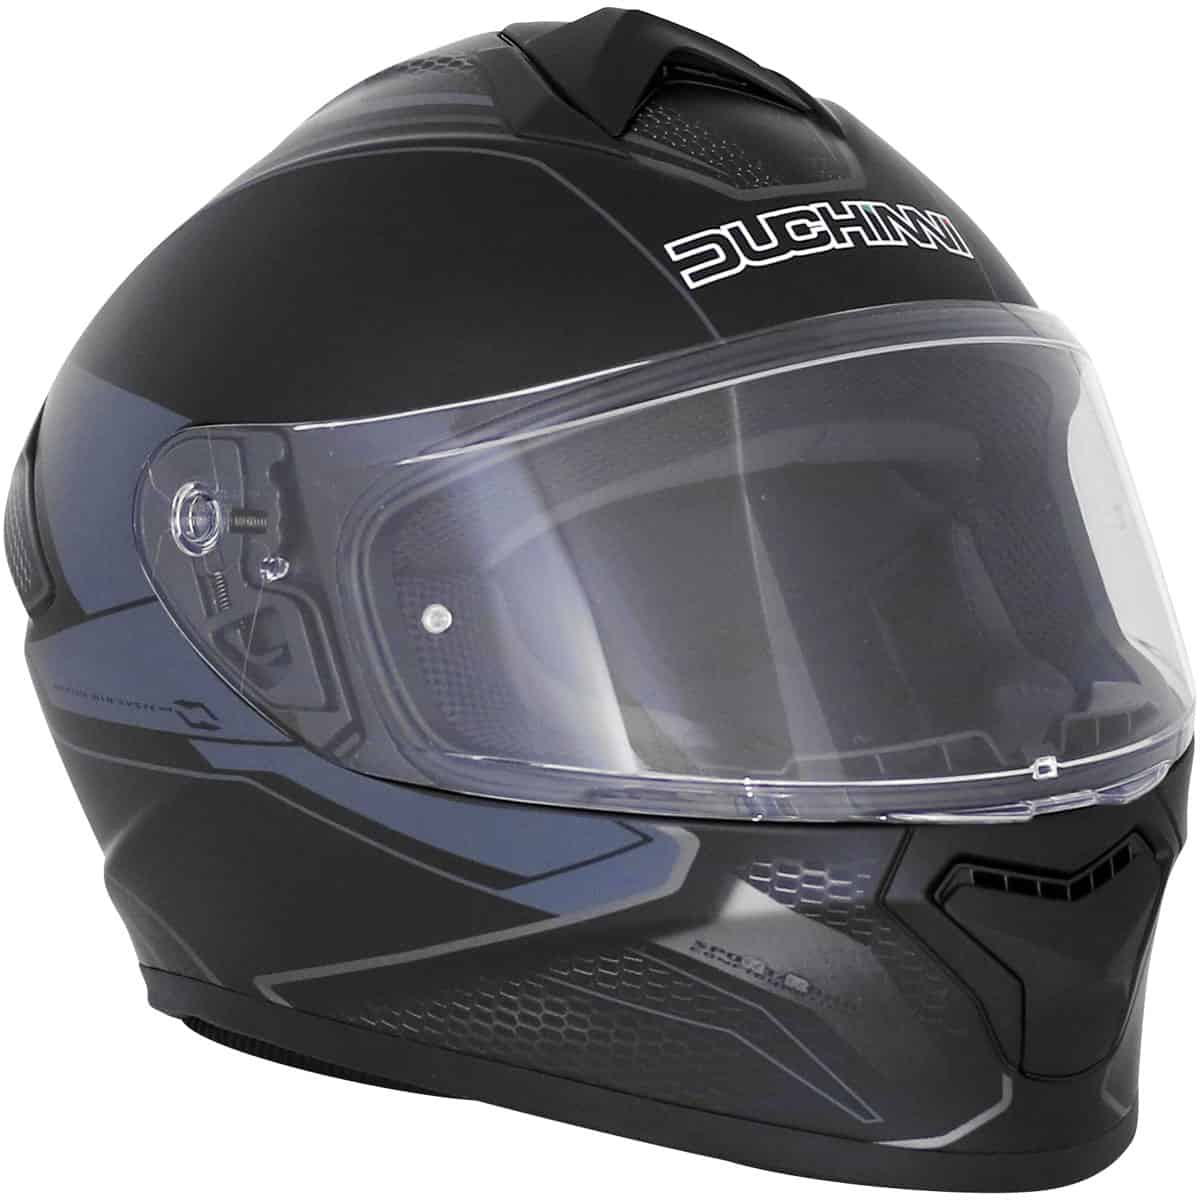 Duchinni D977 Full Face Motorcycle Helmet - Black Gun 4